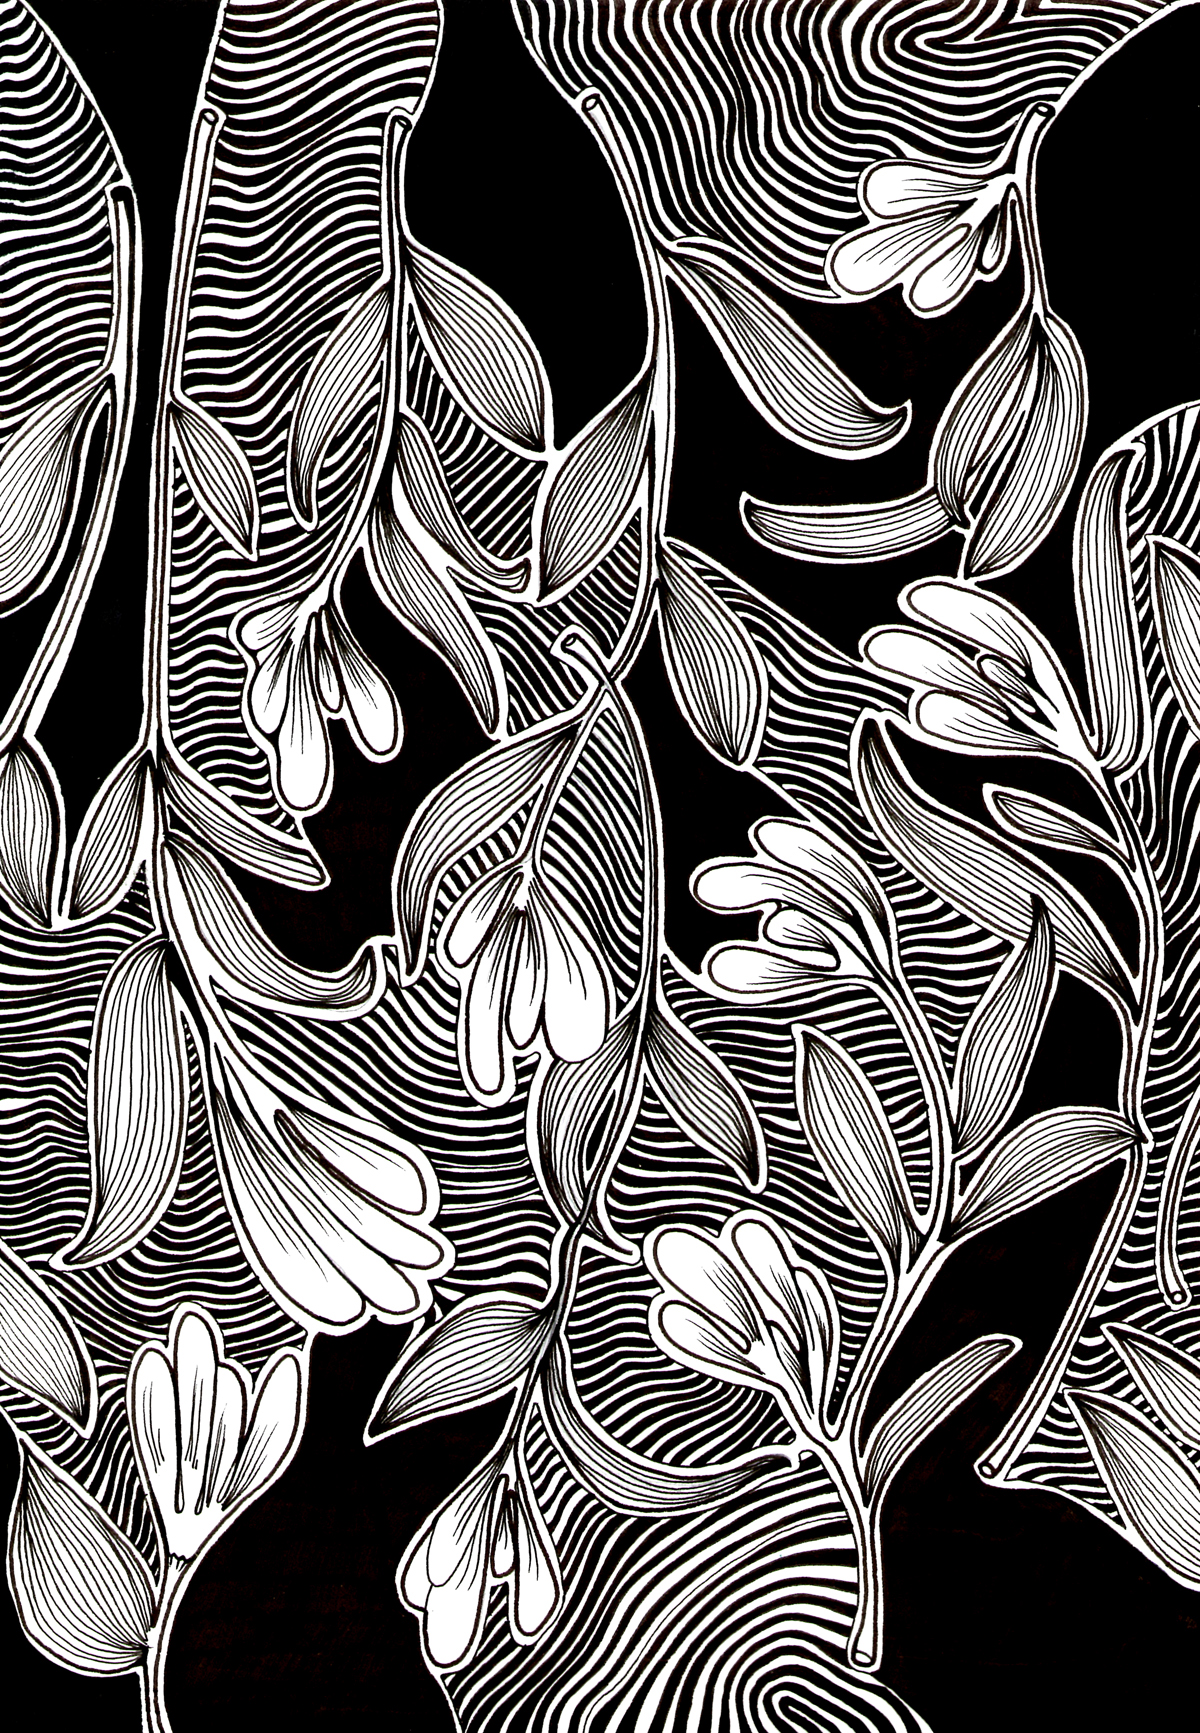 Flowers black White pen feltpen decoration wallpaper iphone ipod iPad case skin